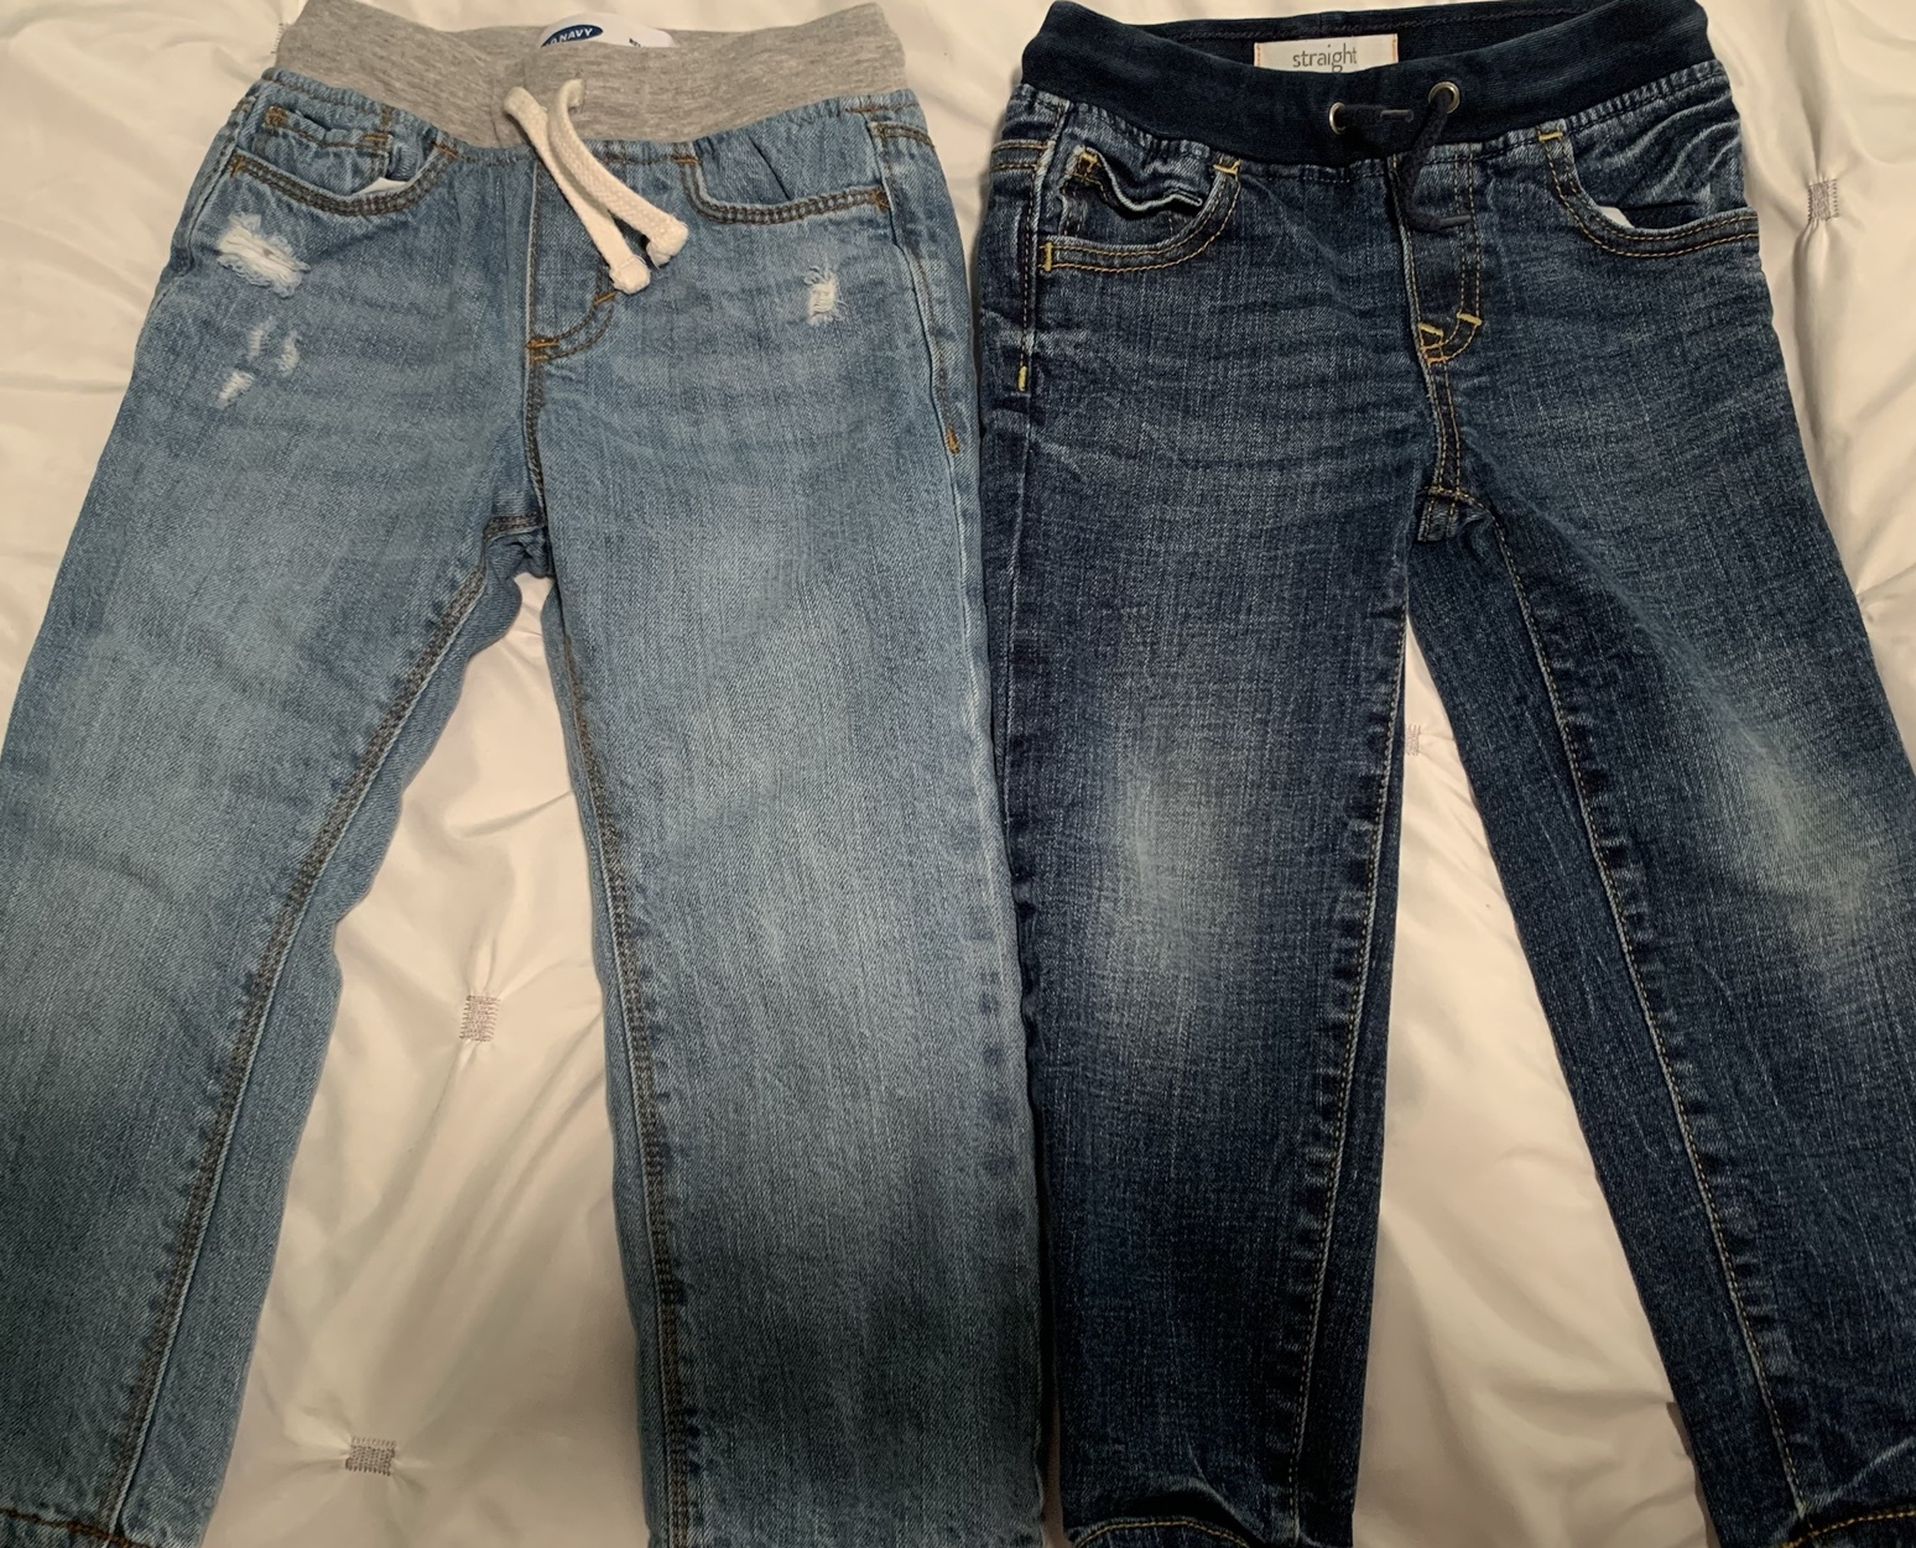 Size 3T Jeans